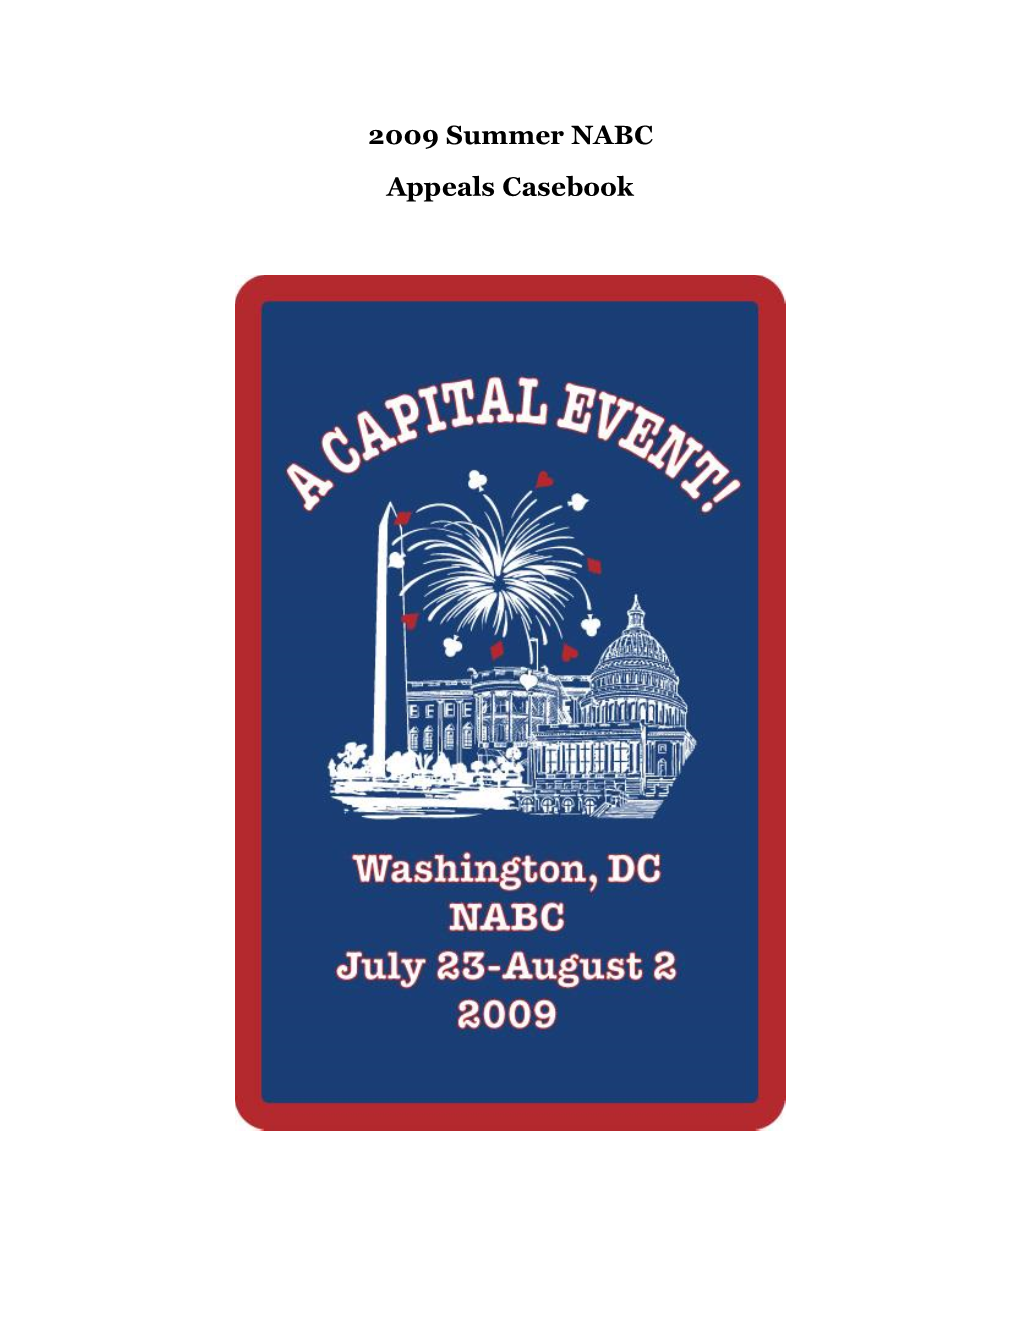 2009 Summer NABC Appeals Casebook